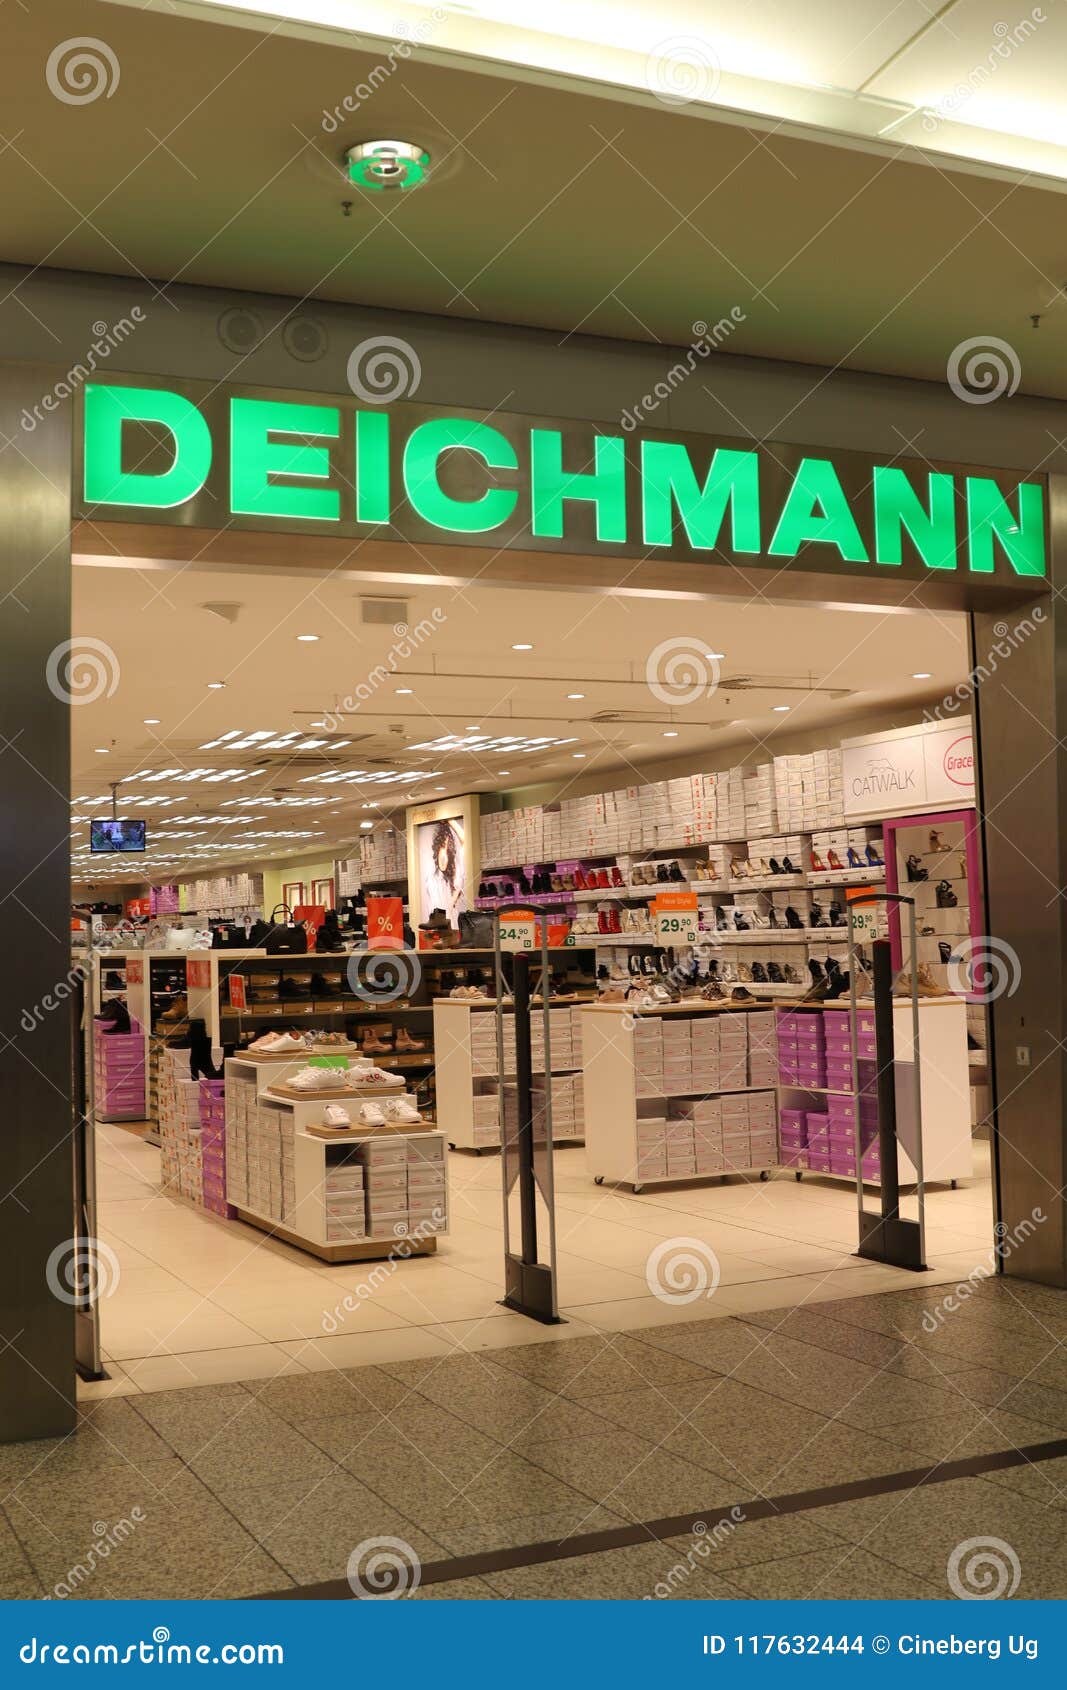 Deichmann - Free & Royalty-Free Photos Dreamstime